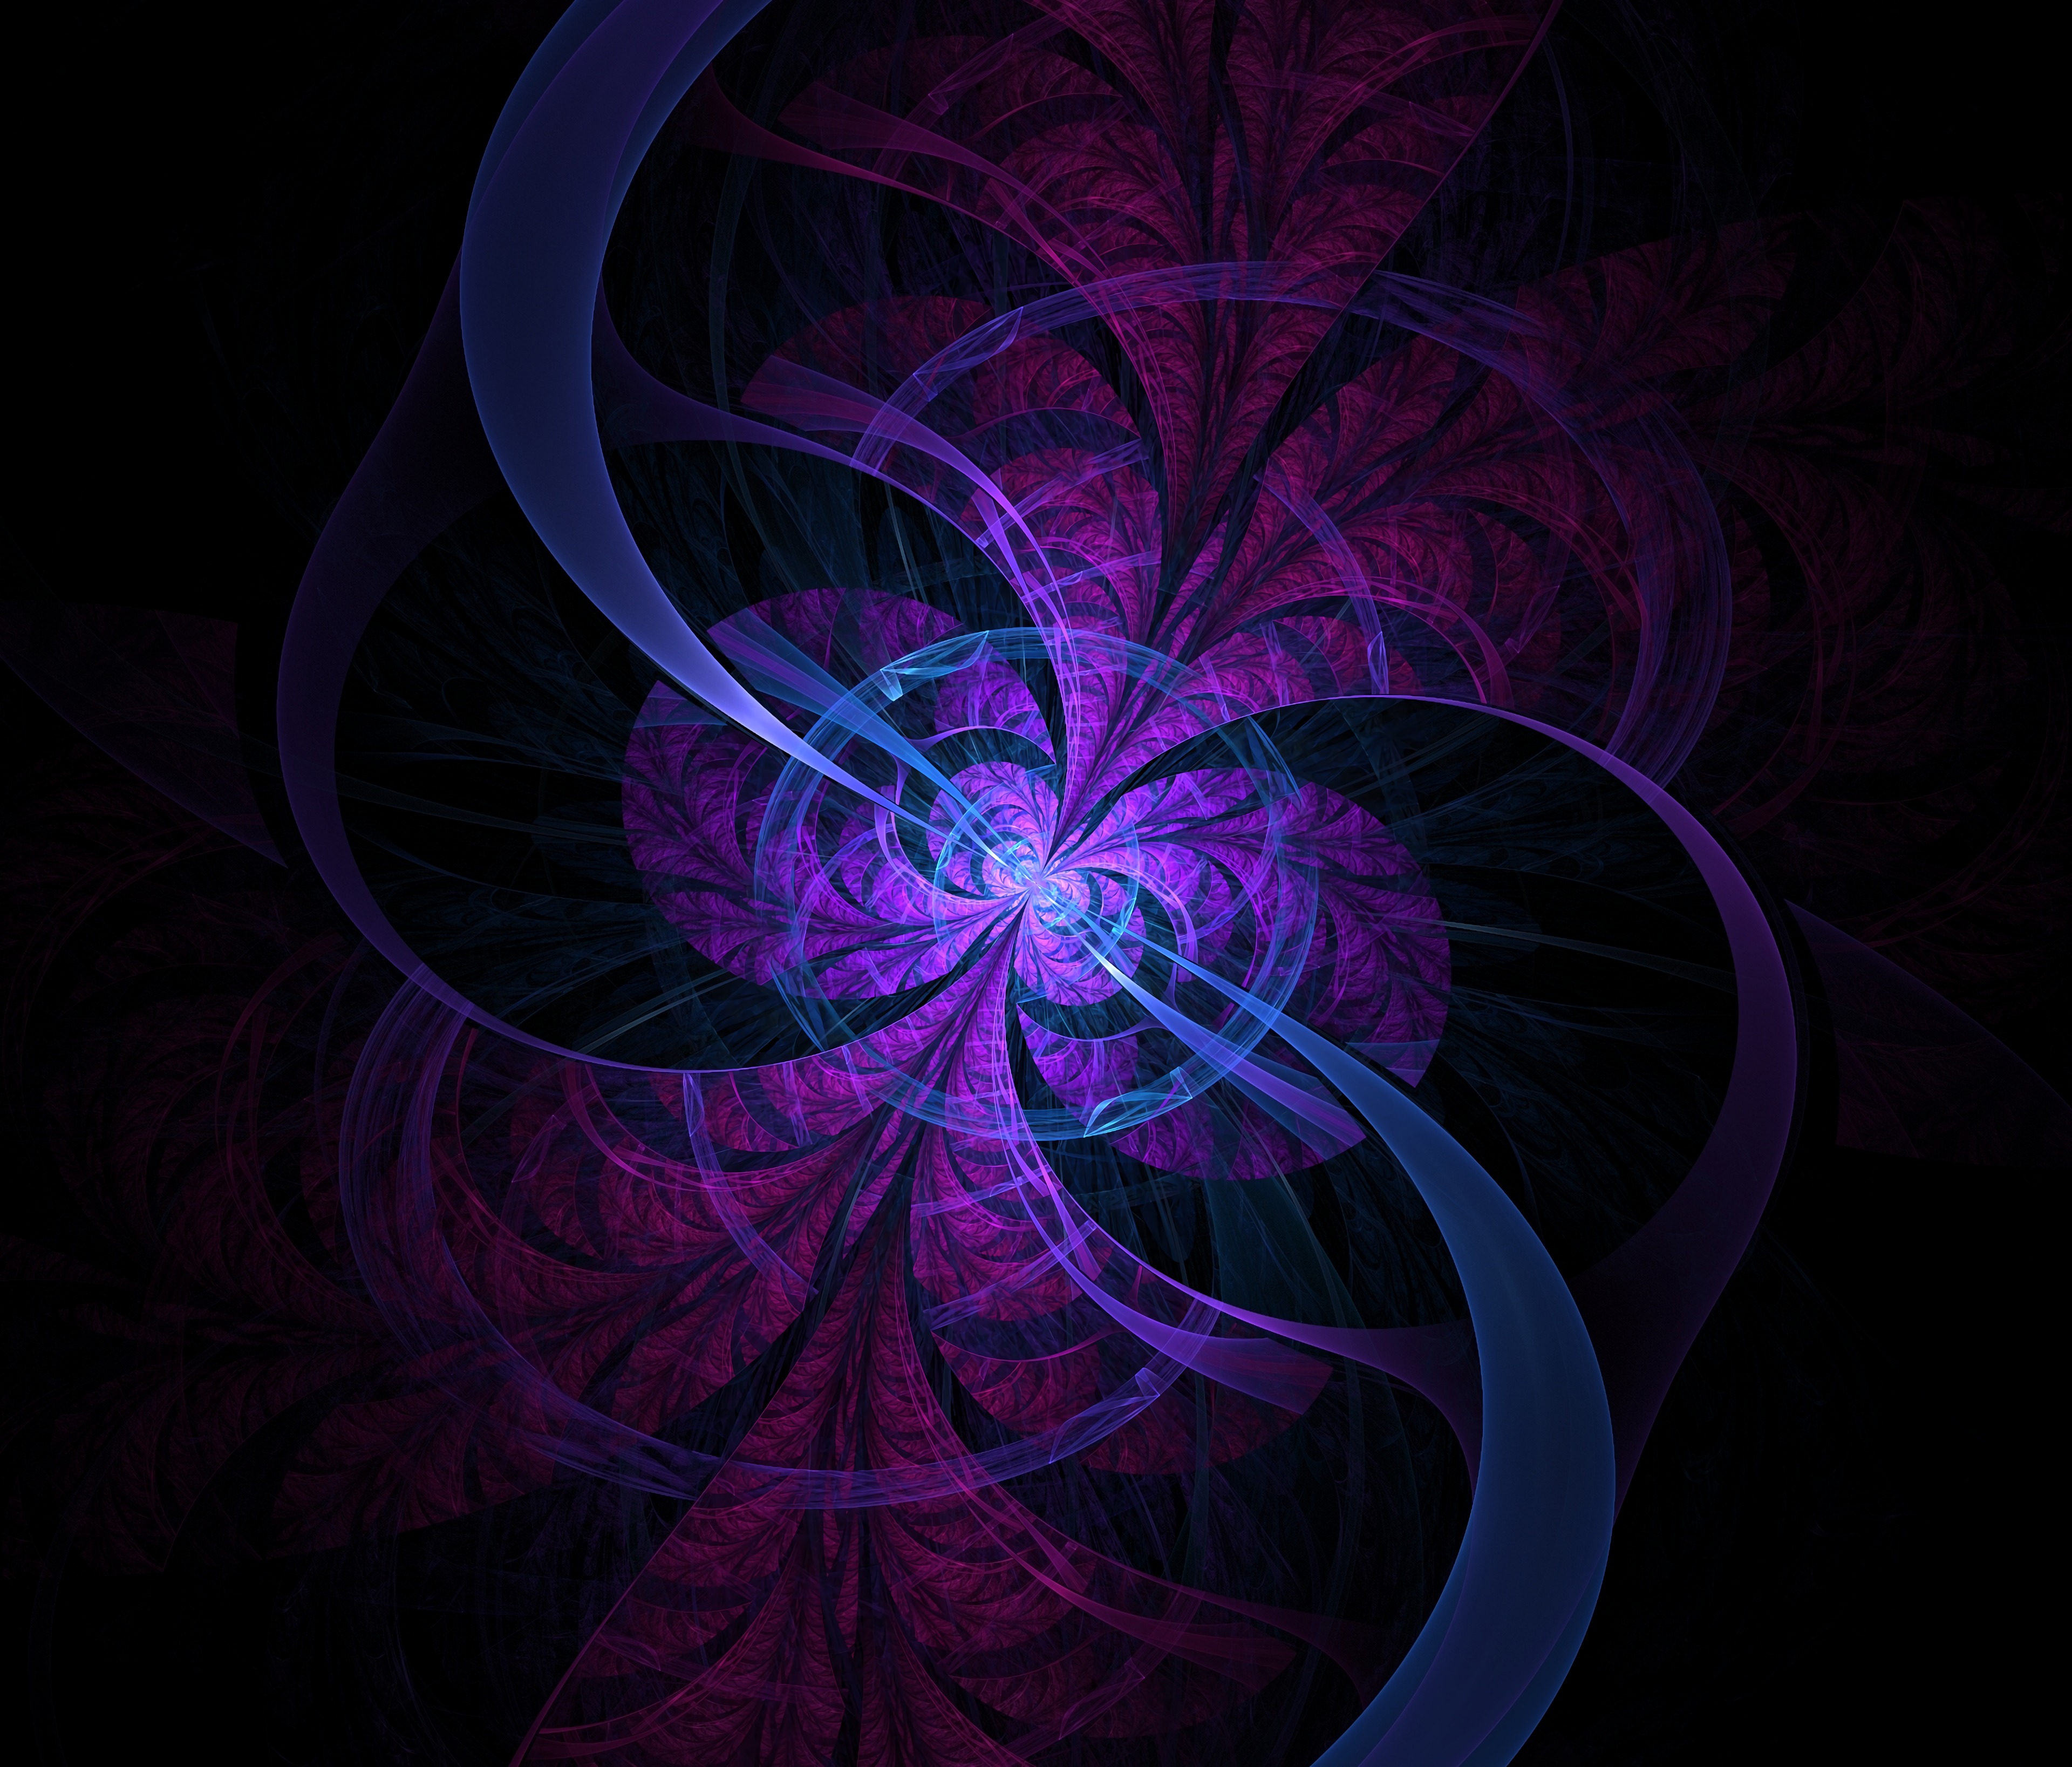 purple, violet, dark, lines, abstract, circles, fractal, diffusion, dispersion